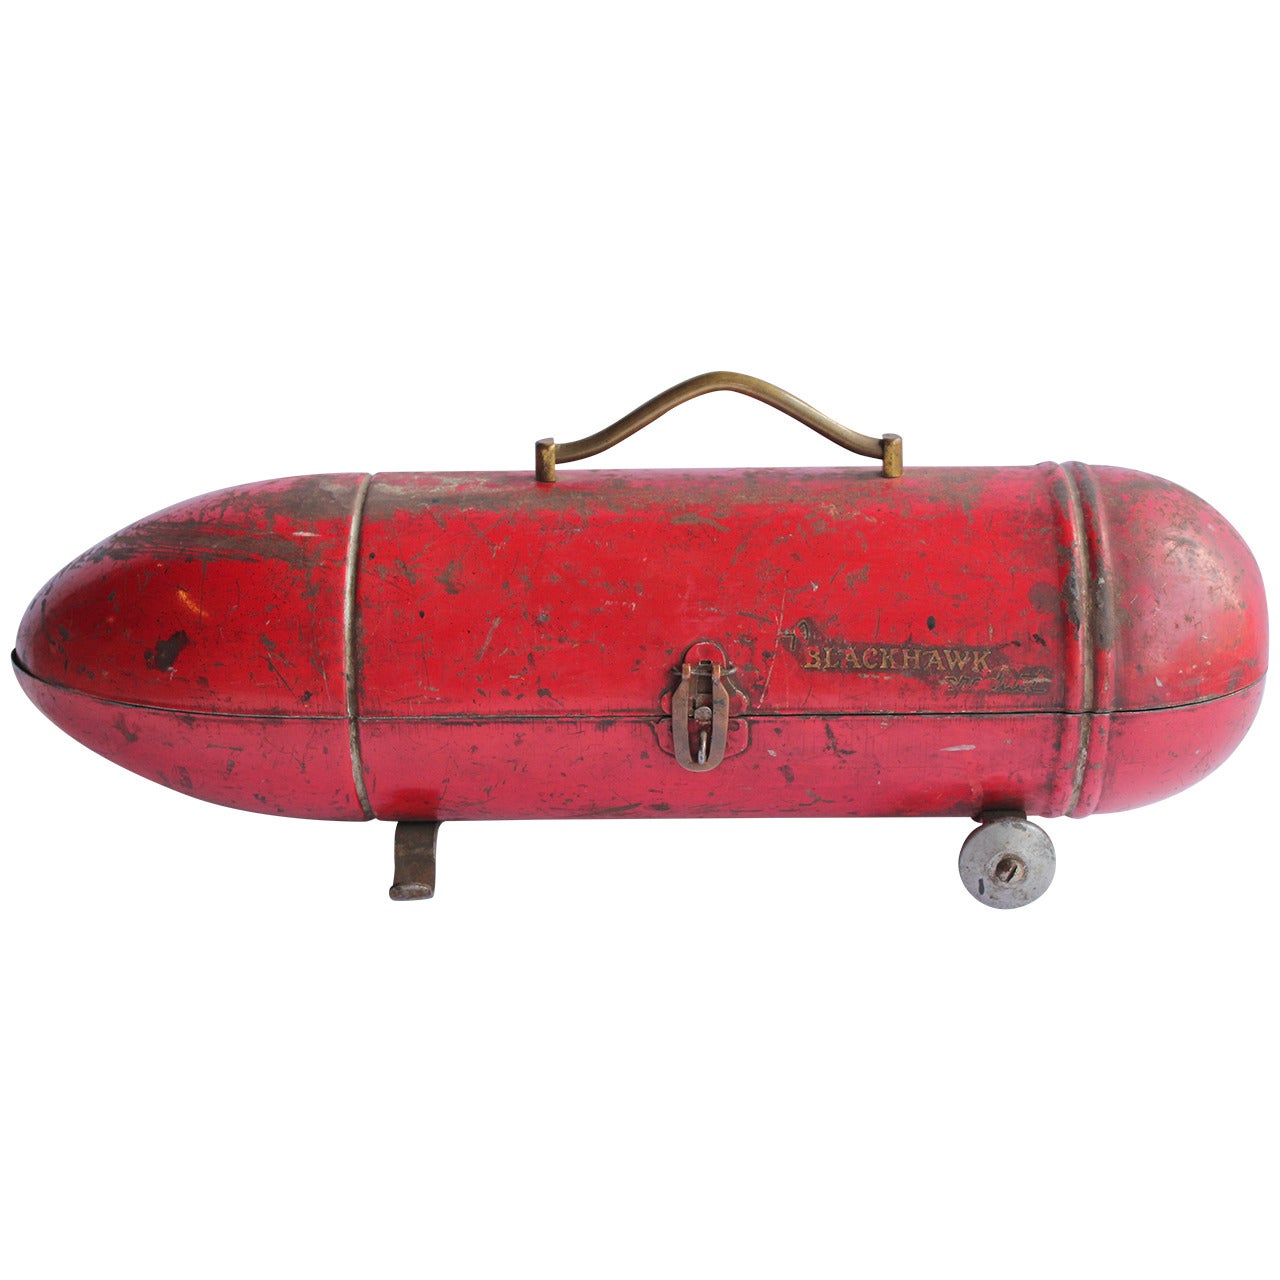 Vintage American Zeppelin Tool Box by Blackhawk For Sale